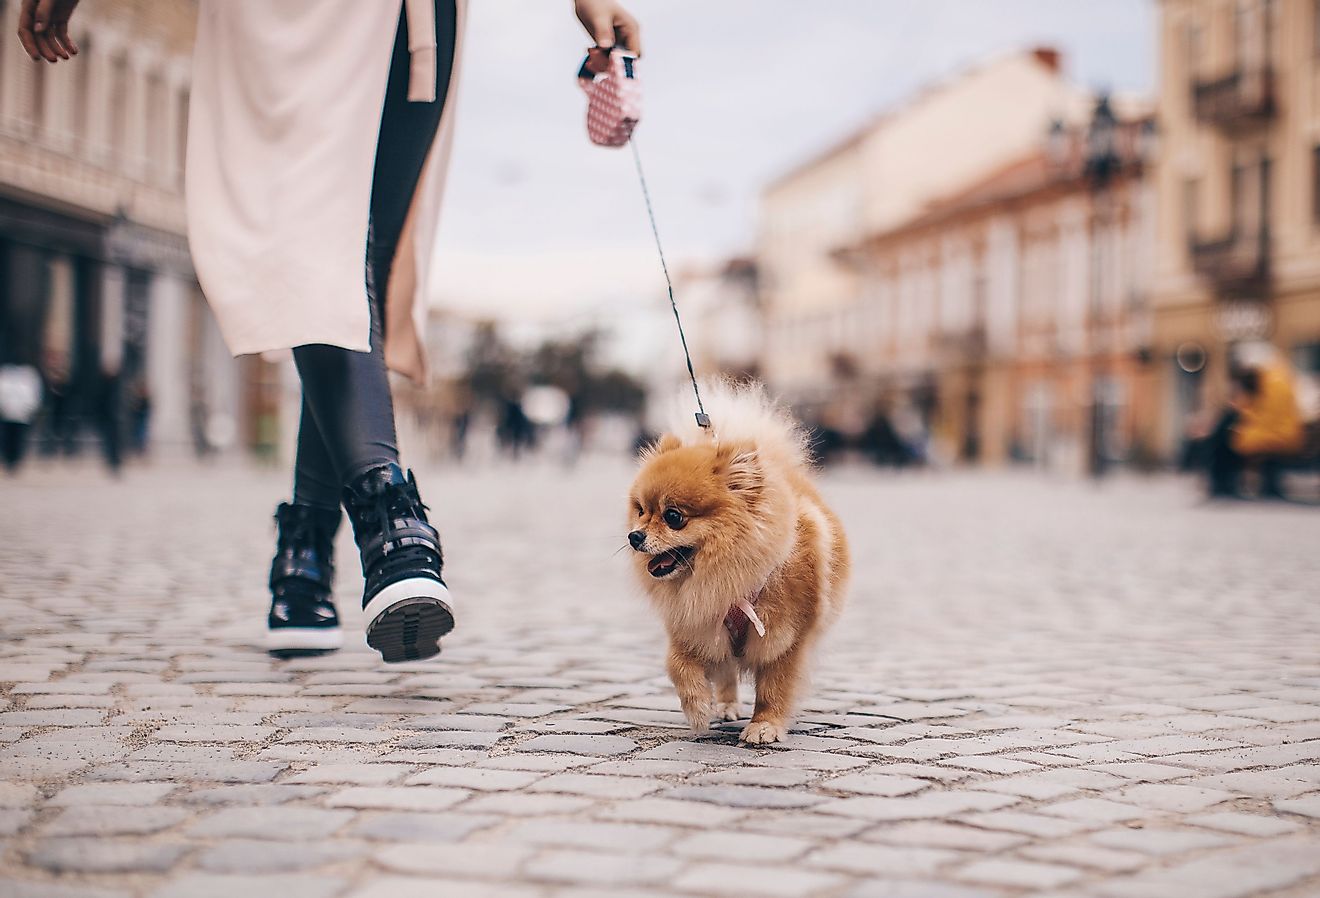 Woman walking with small dog. Image credit Ilona Peter-Halica via Shutterstock